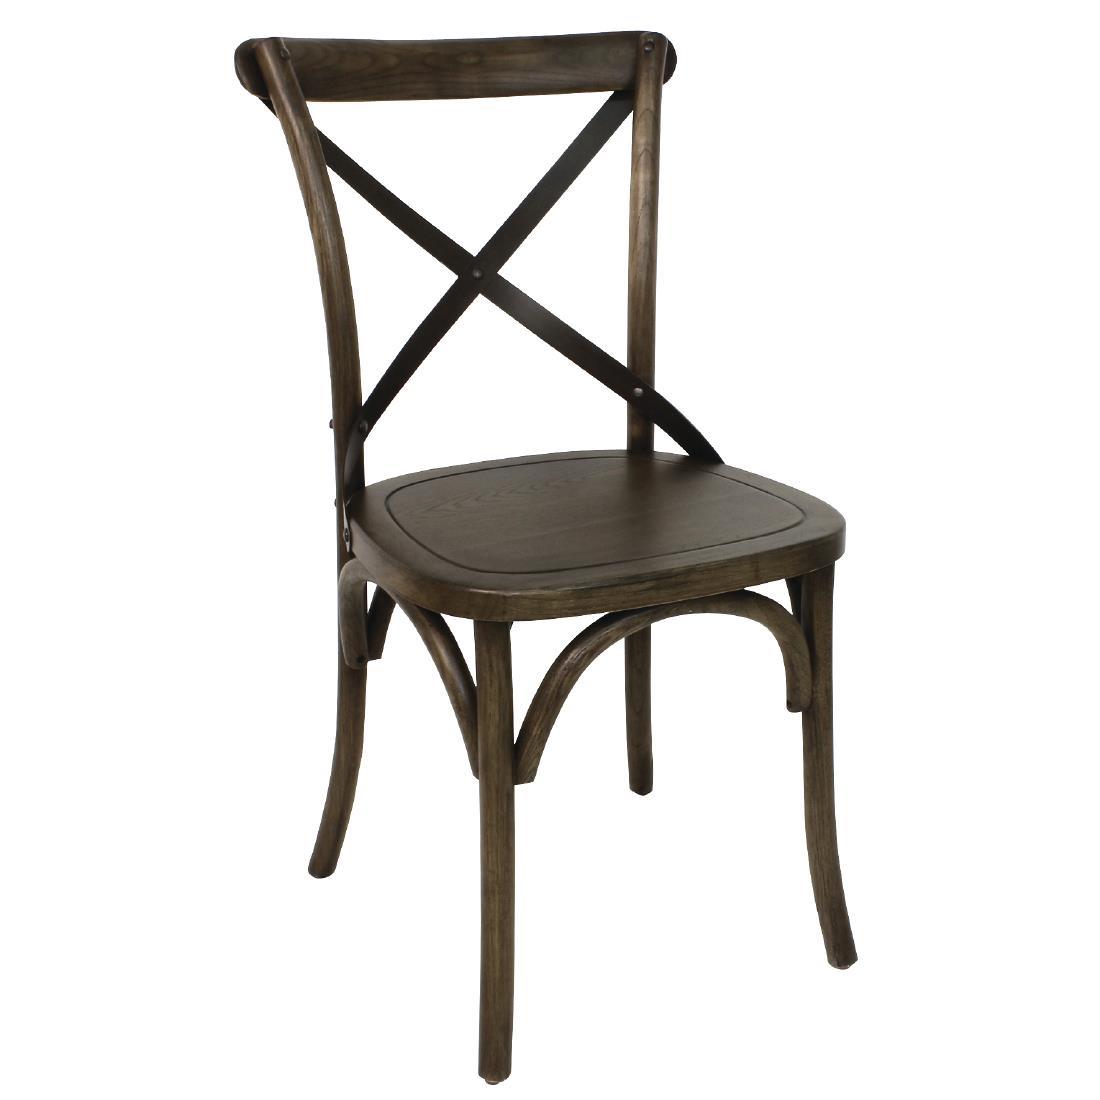 GG658 - Bolero Wooden Dining Chair with Metal Cross Backrest (Walnut Finish) (Pa - GG658  - 1